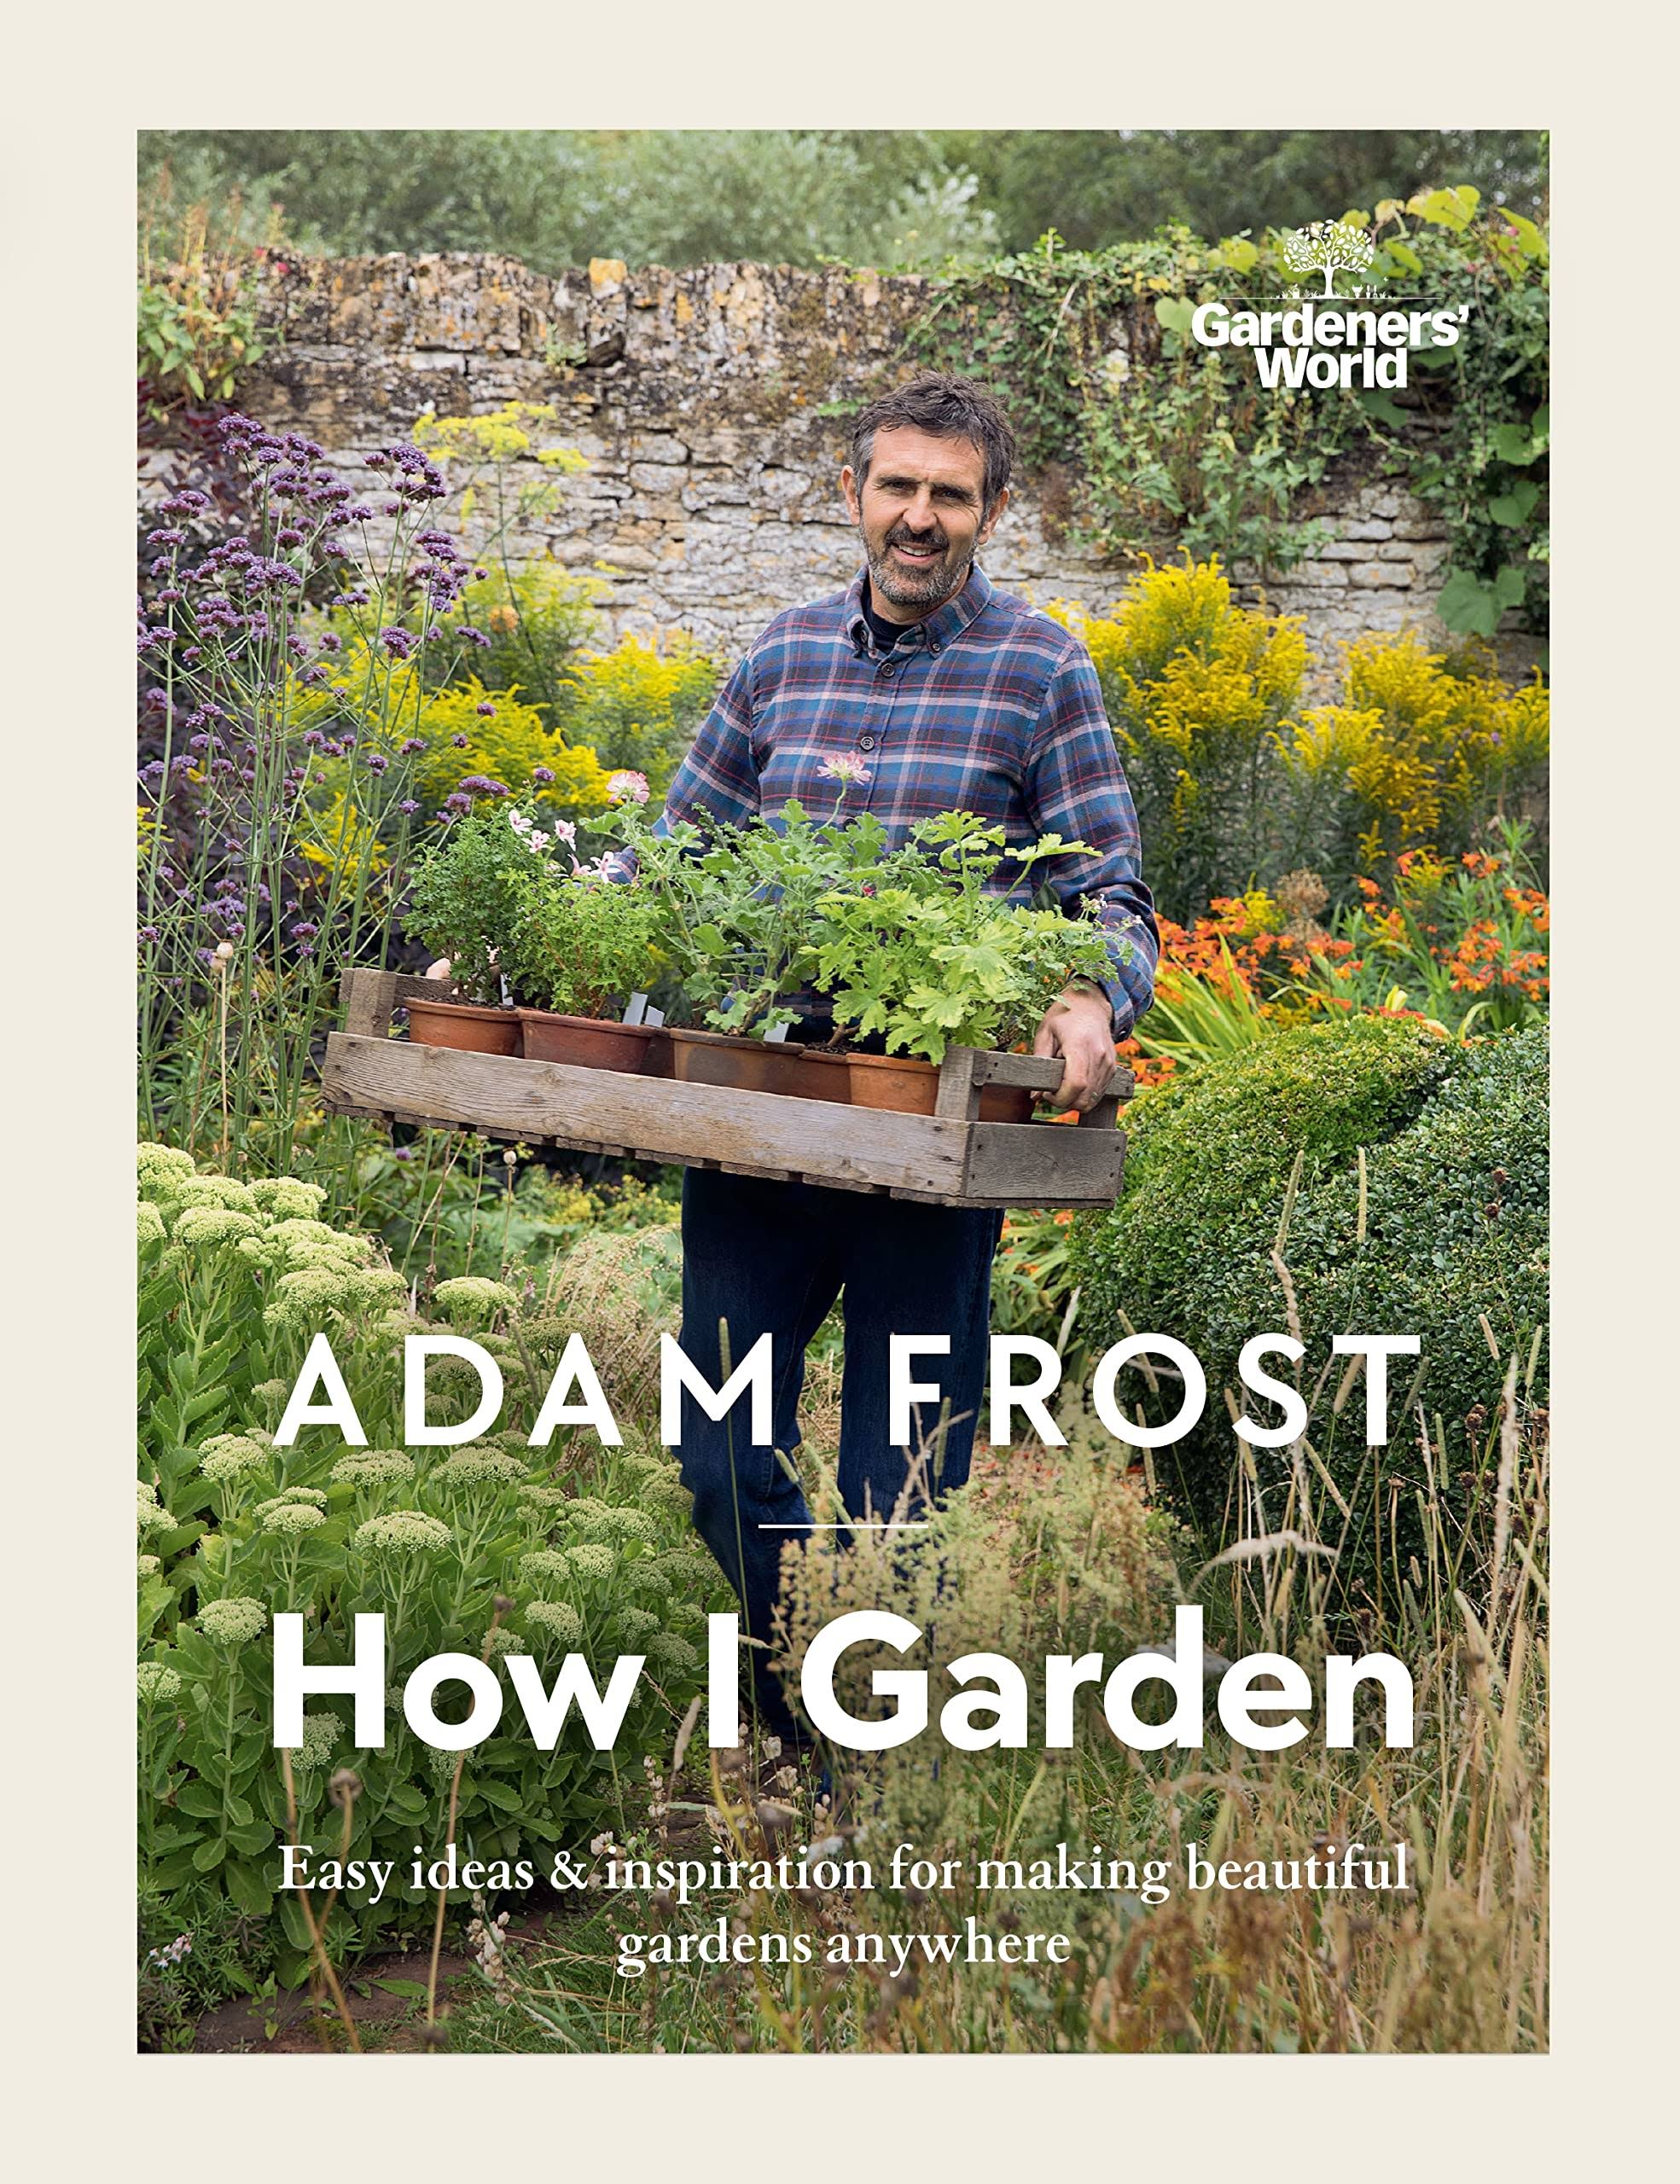 Gardener's World: How I Garden by Adam Frost